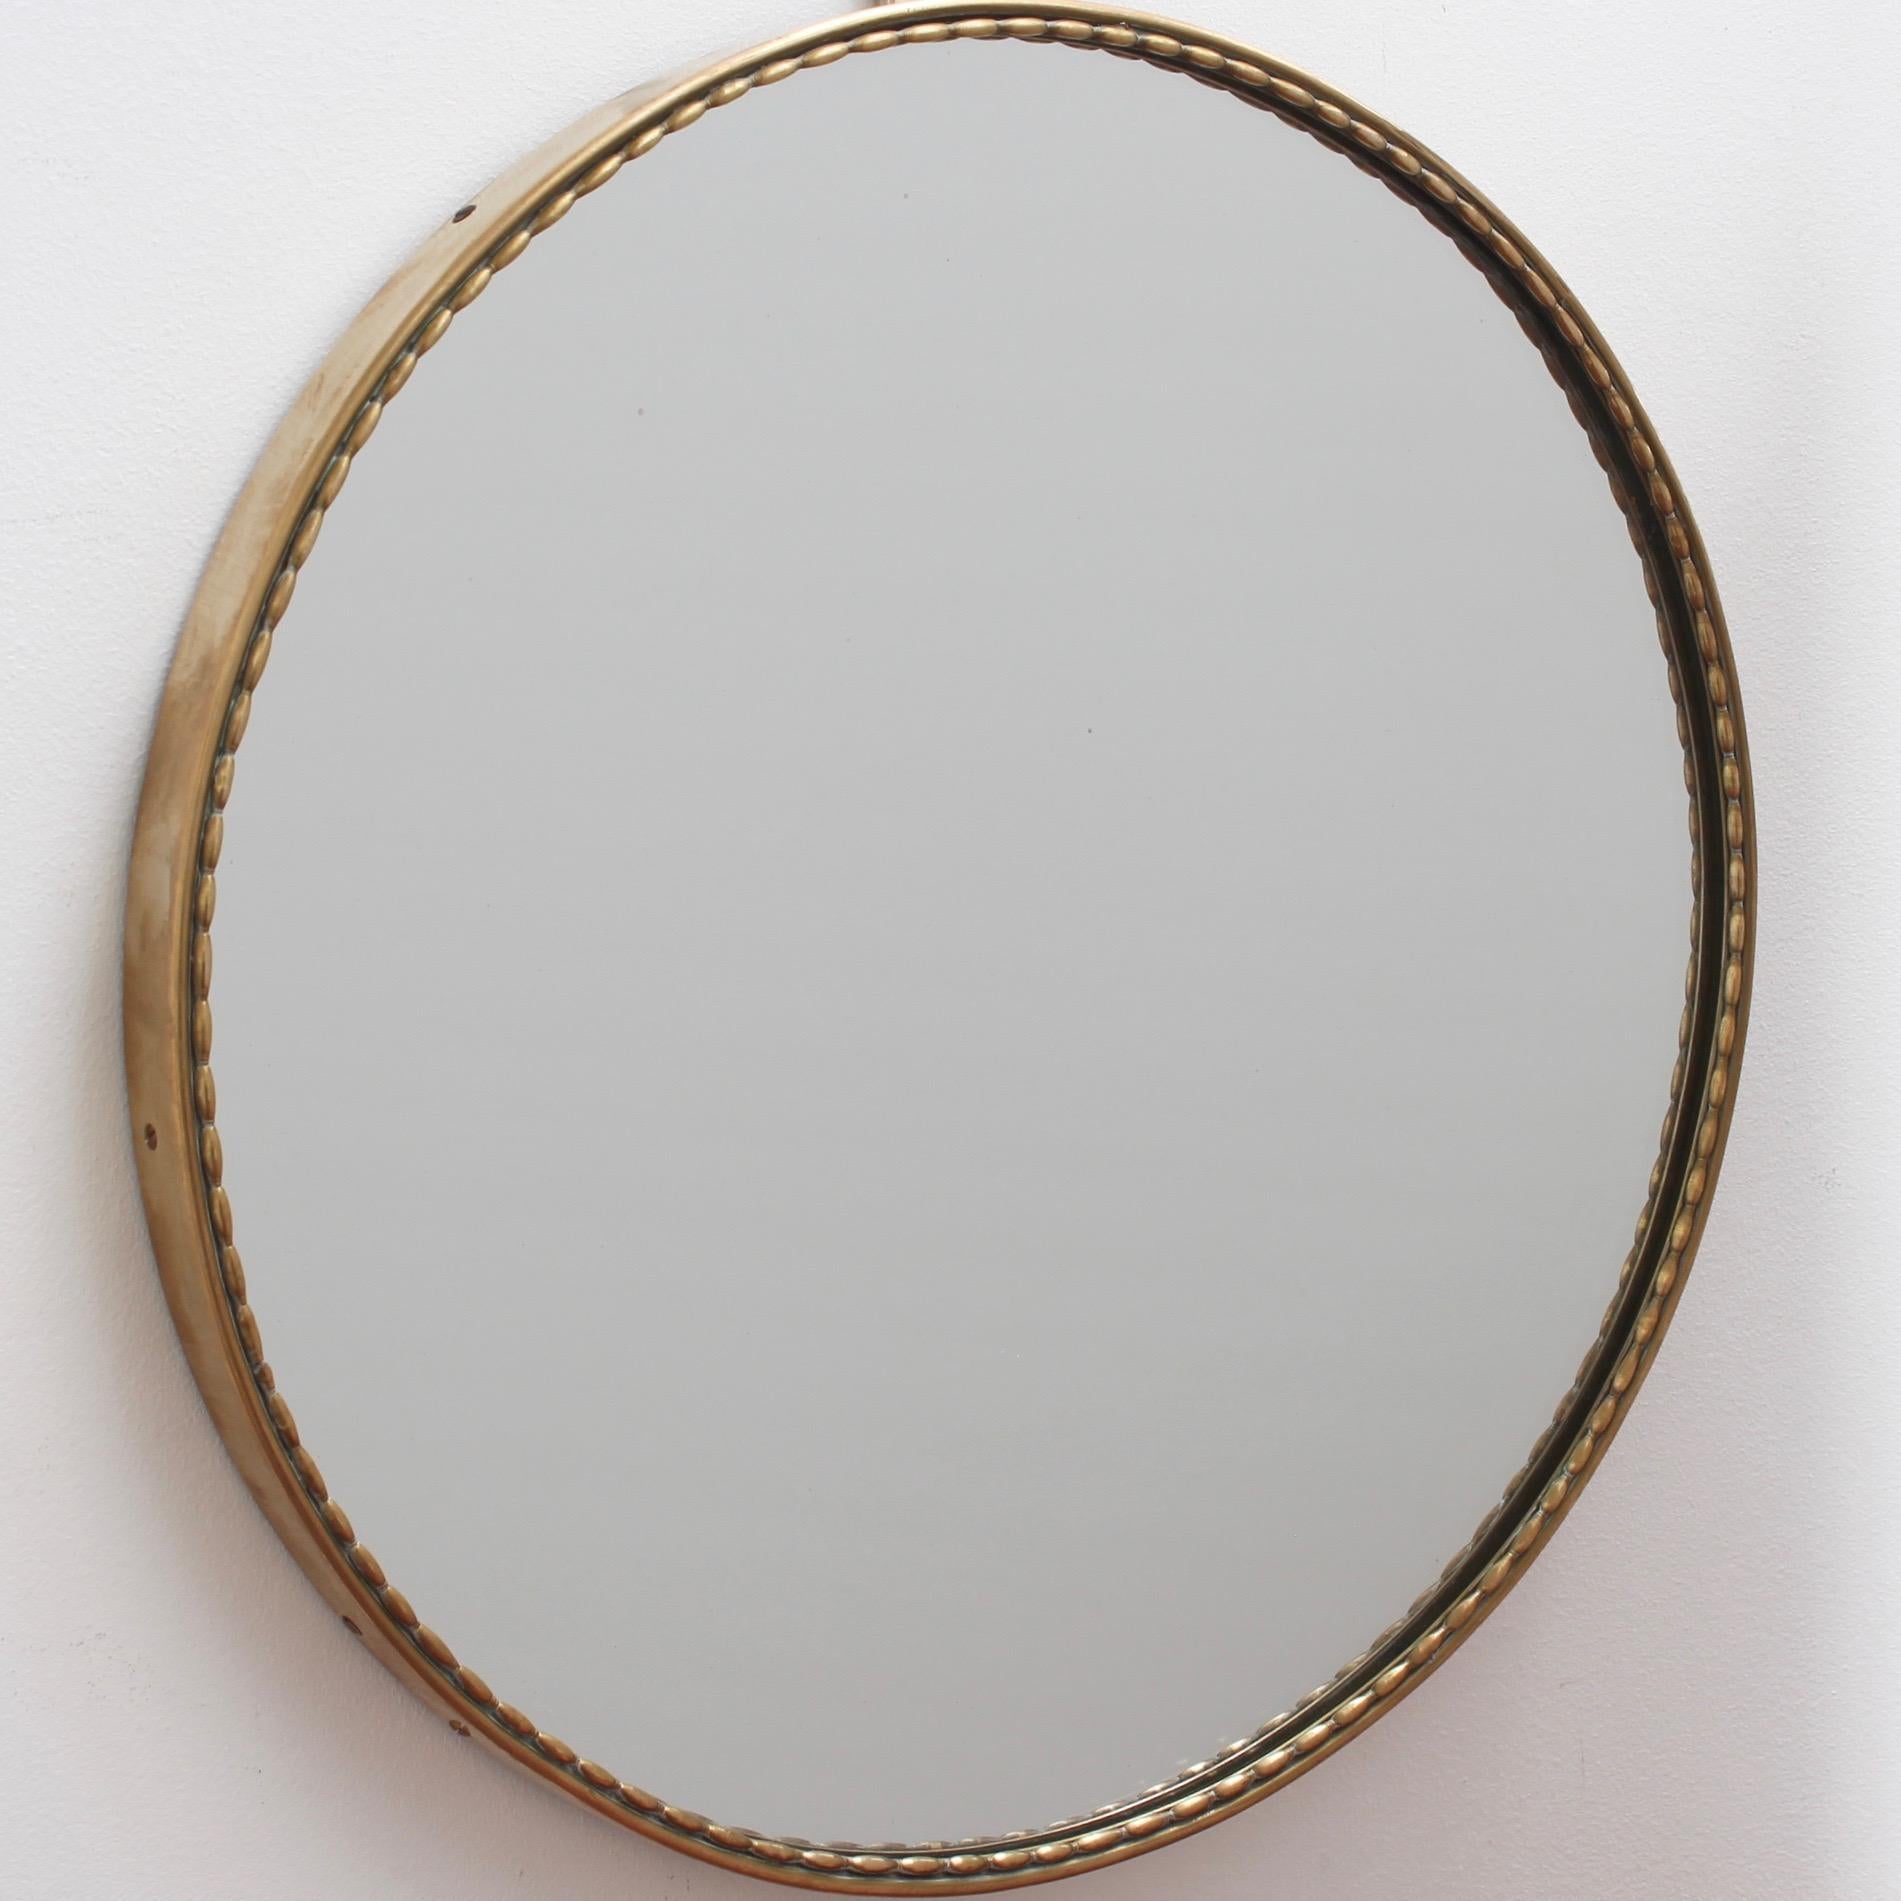 Mid-20th Century Mid-Century Italian Round Wall Mirror with Brass Frame, circa 1950s - Small